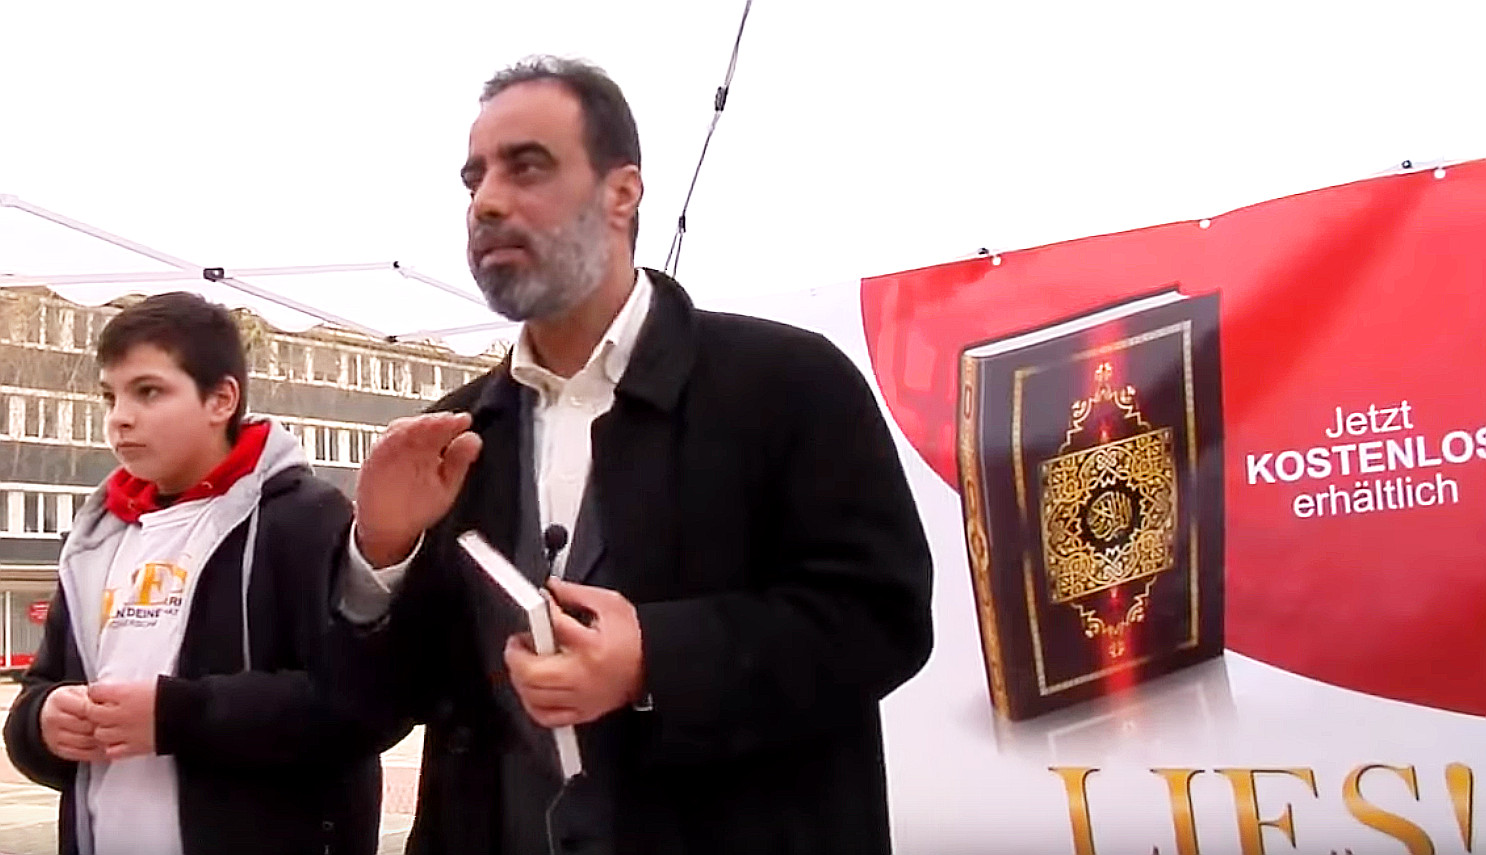 Gratis-Koran-Verteilungen verboten: Wien Döbling gegen „Lies!“-Aktion